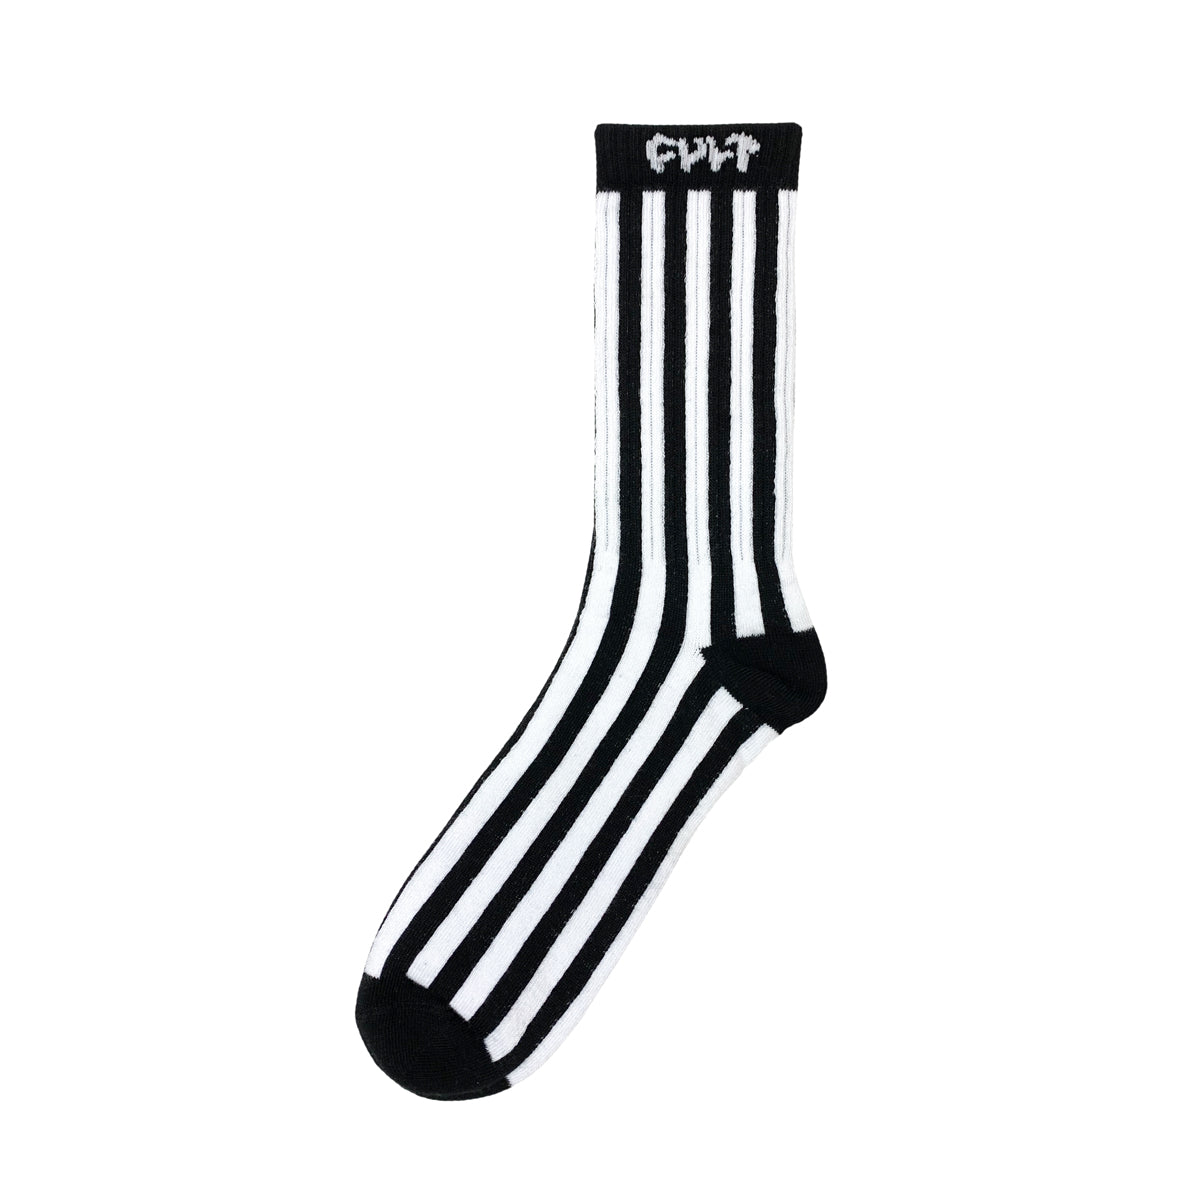 Vertical Socks / referee